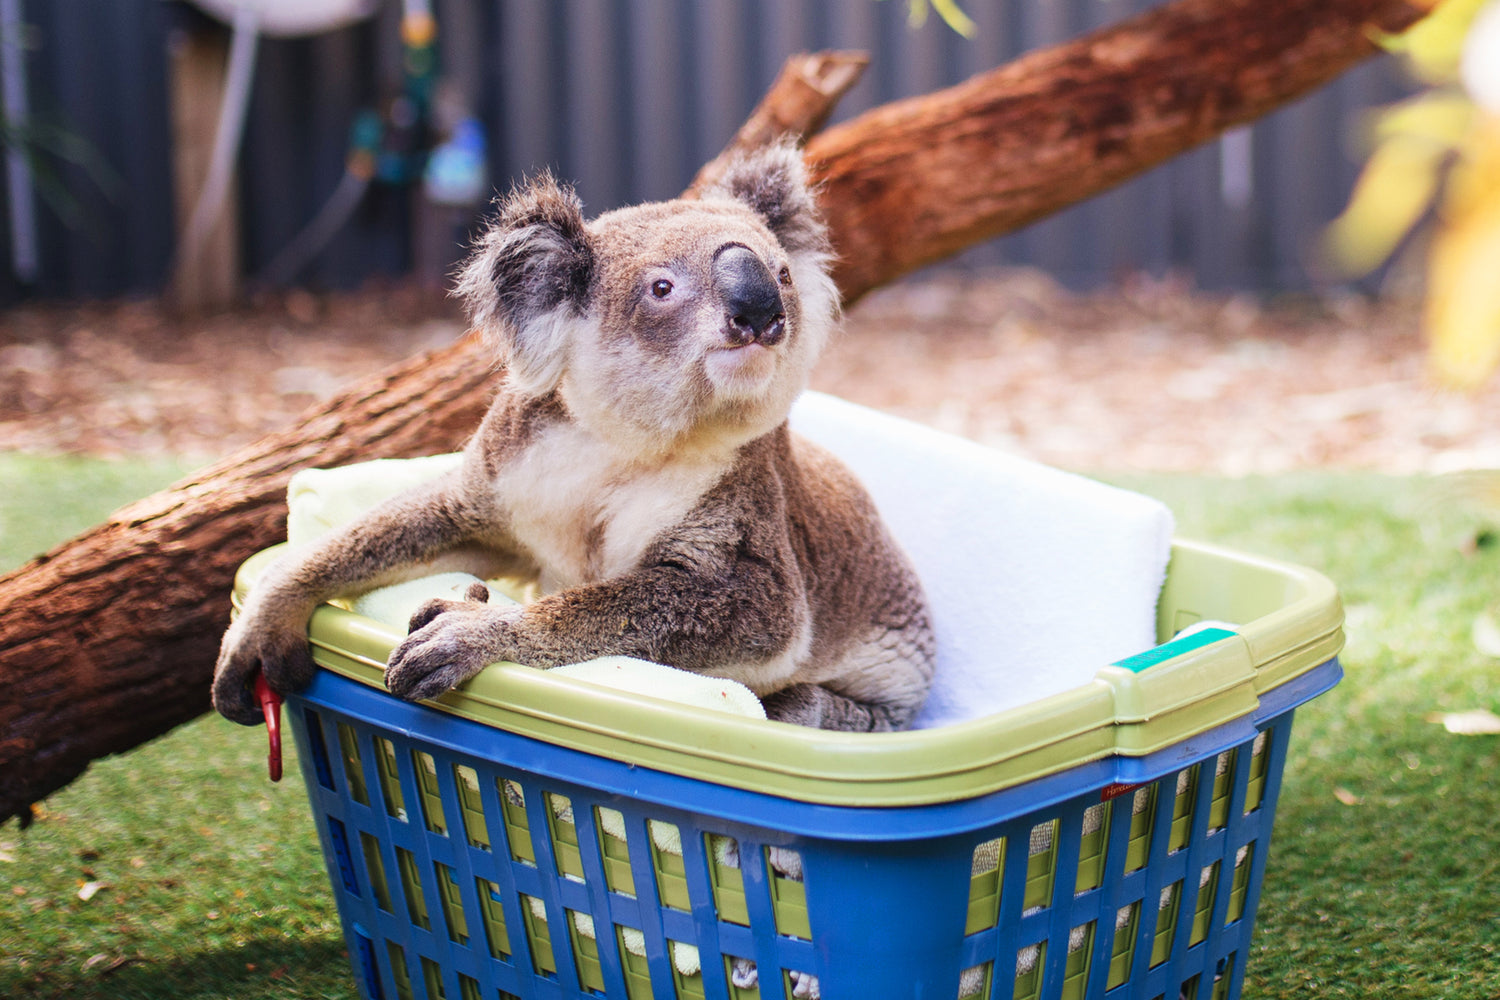 Koala in basket at the Port Stephens Koala Sanctuary